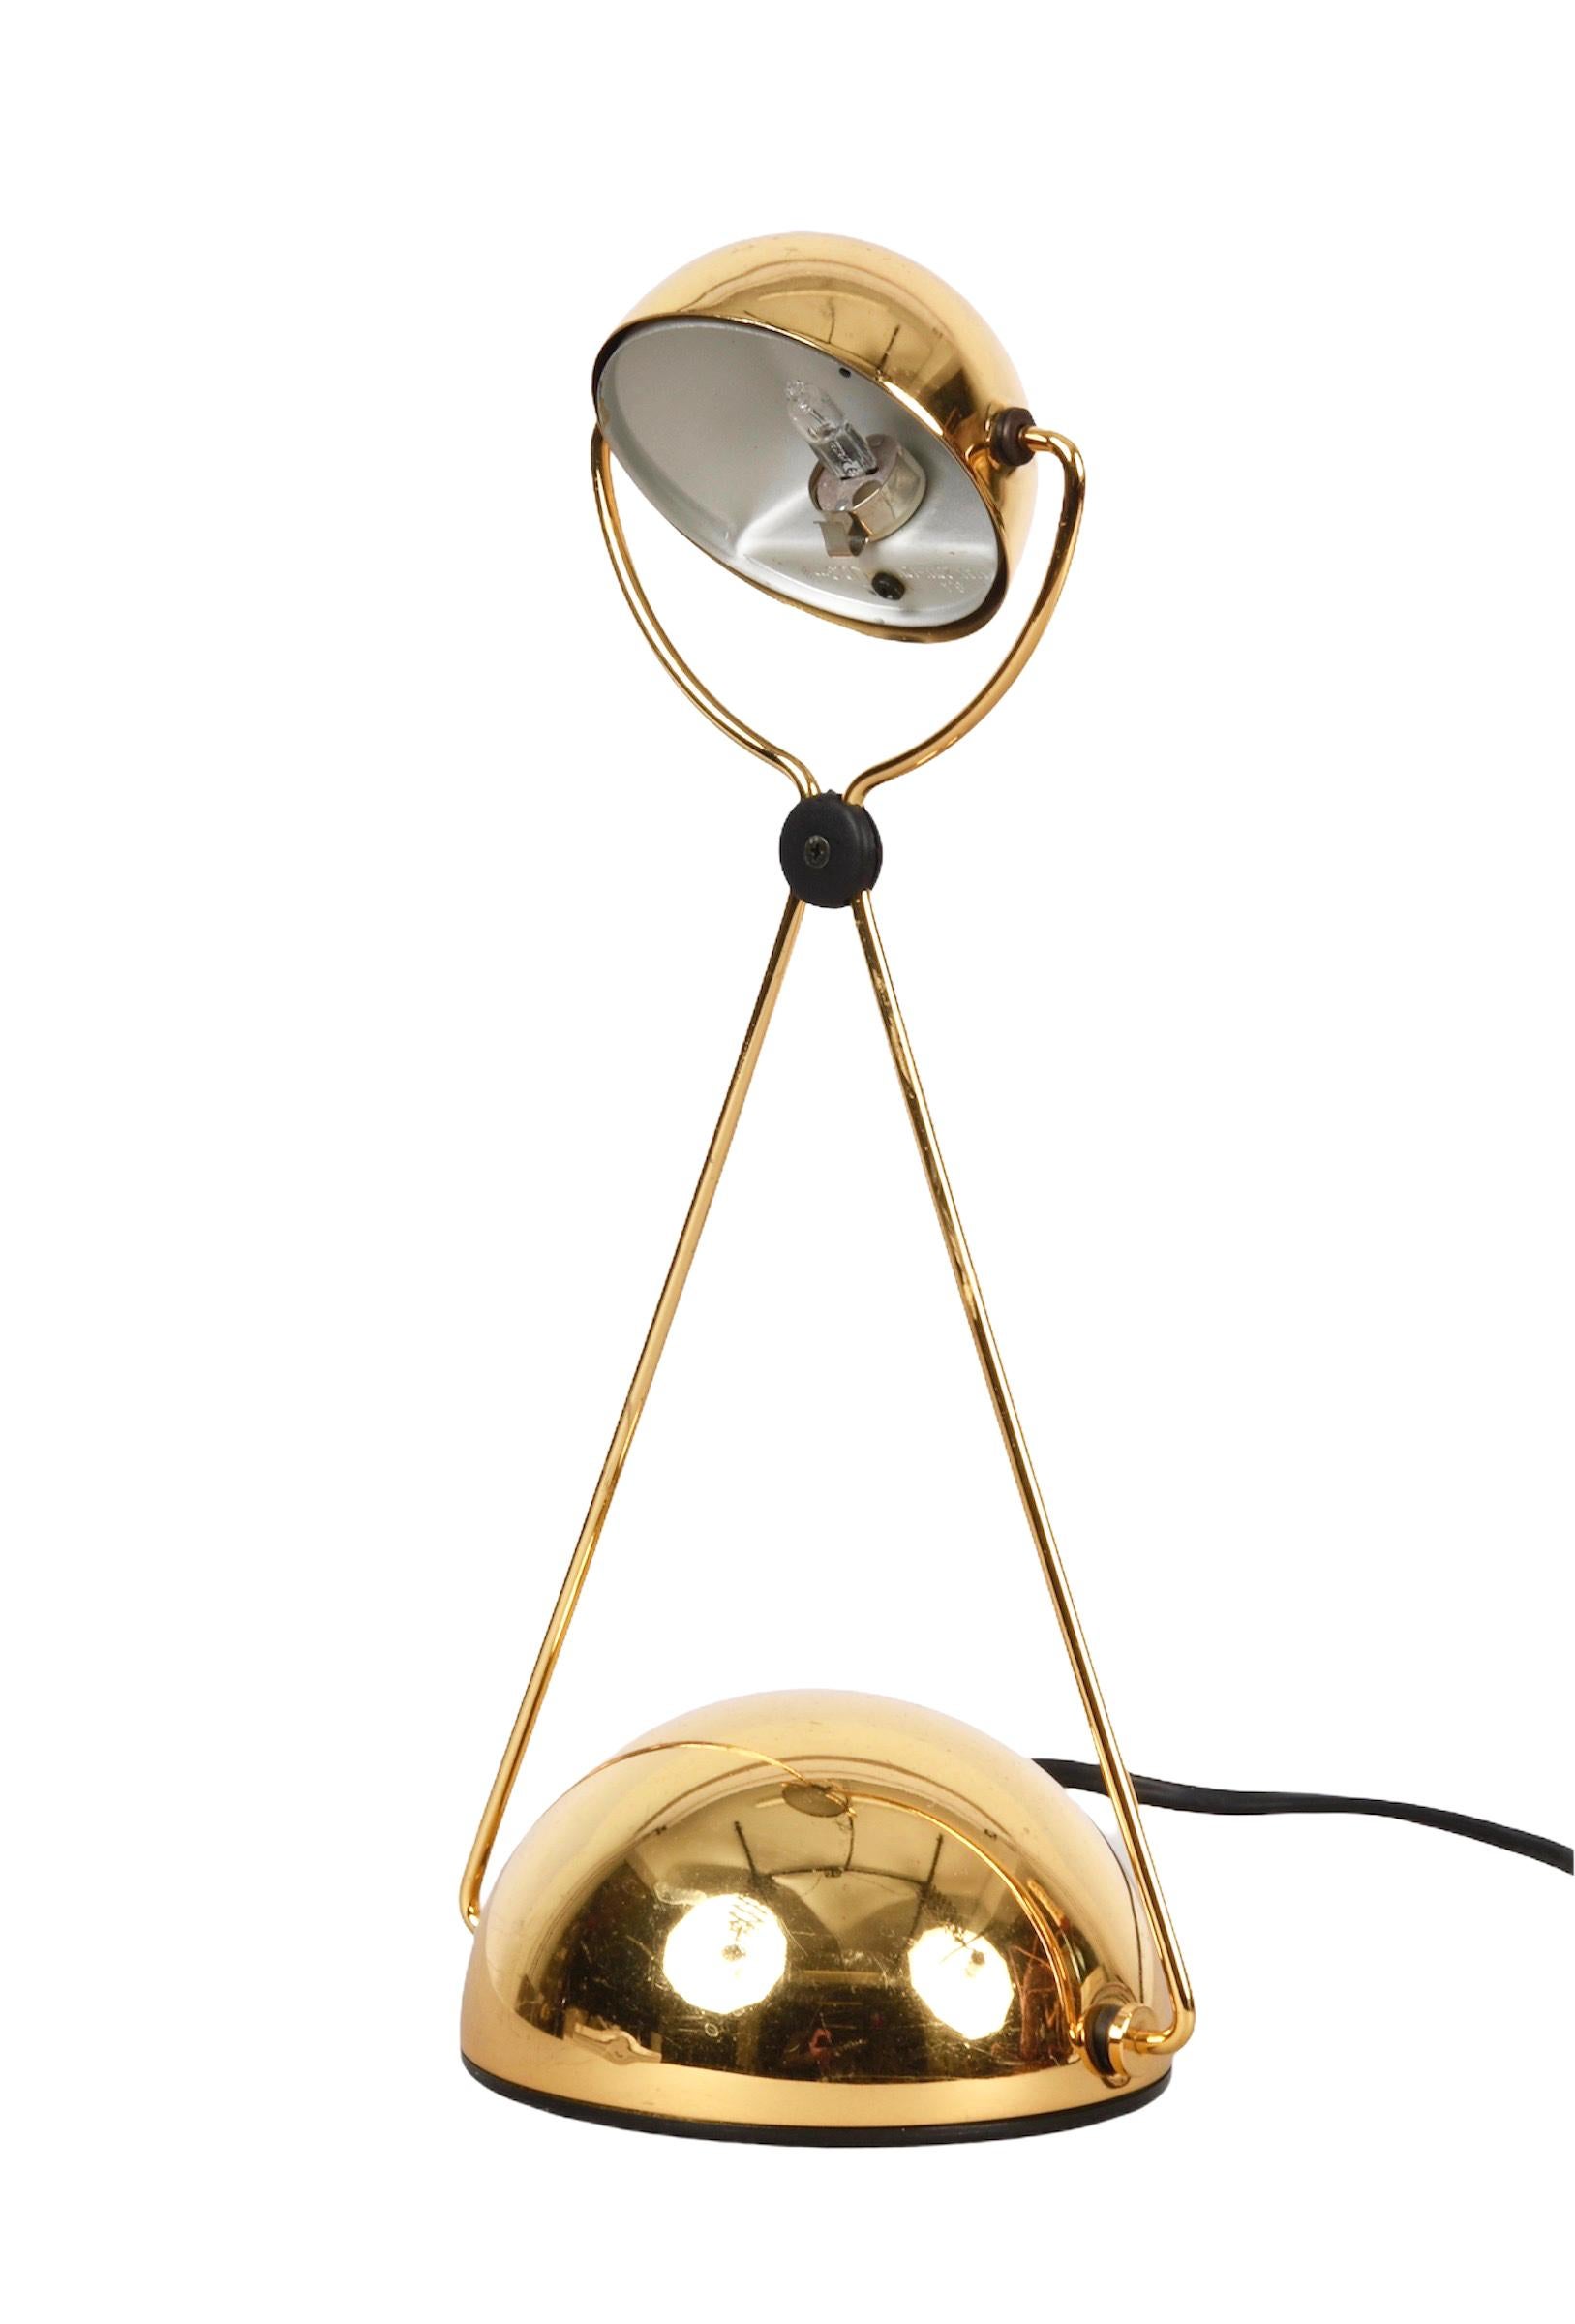 Stefano Cevoli Midcentury Gold-Plated Metal Italian Table Lamp 'Meridiana' 1980s For Sale 7